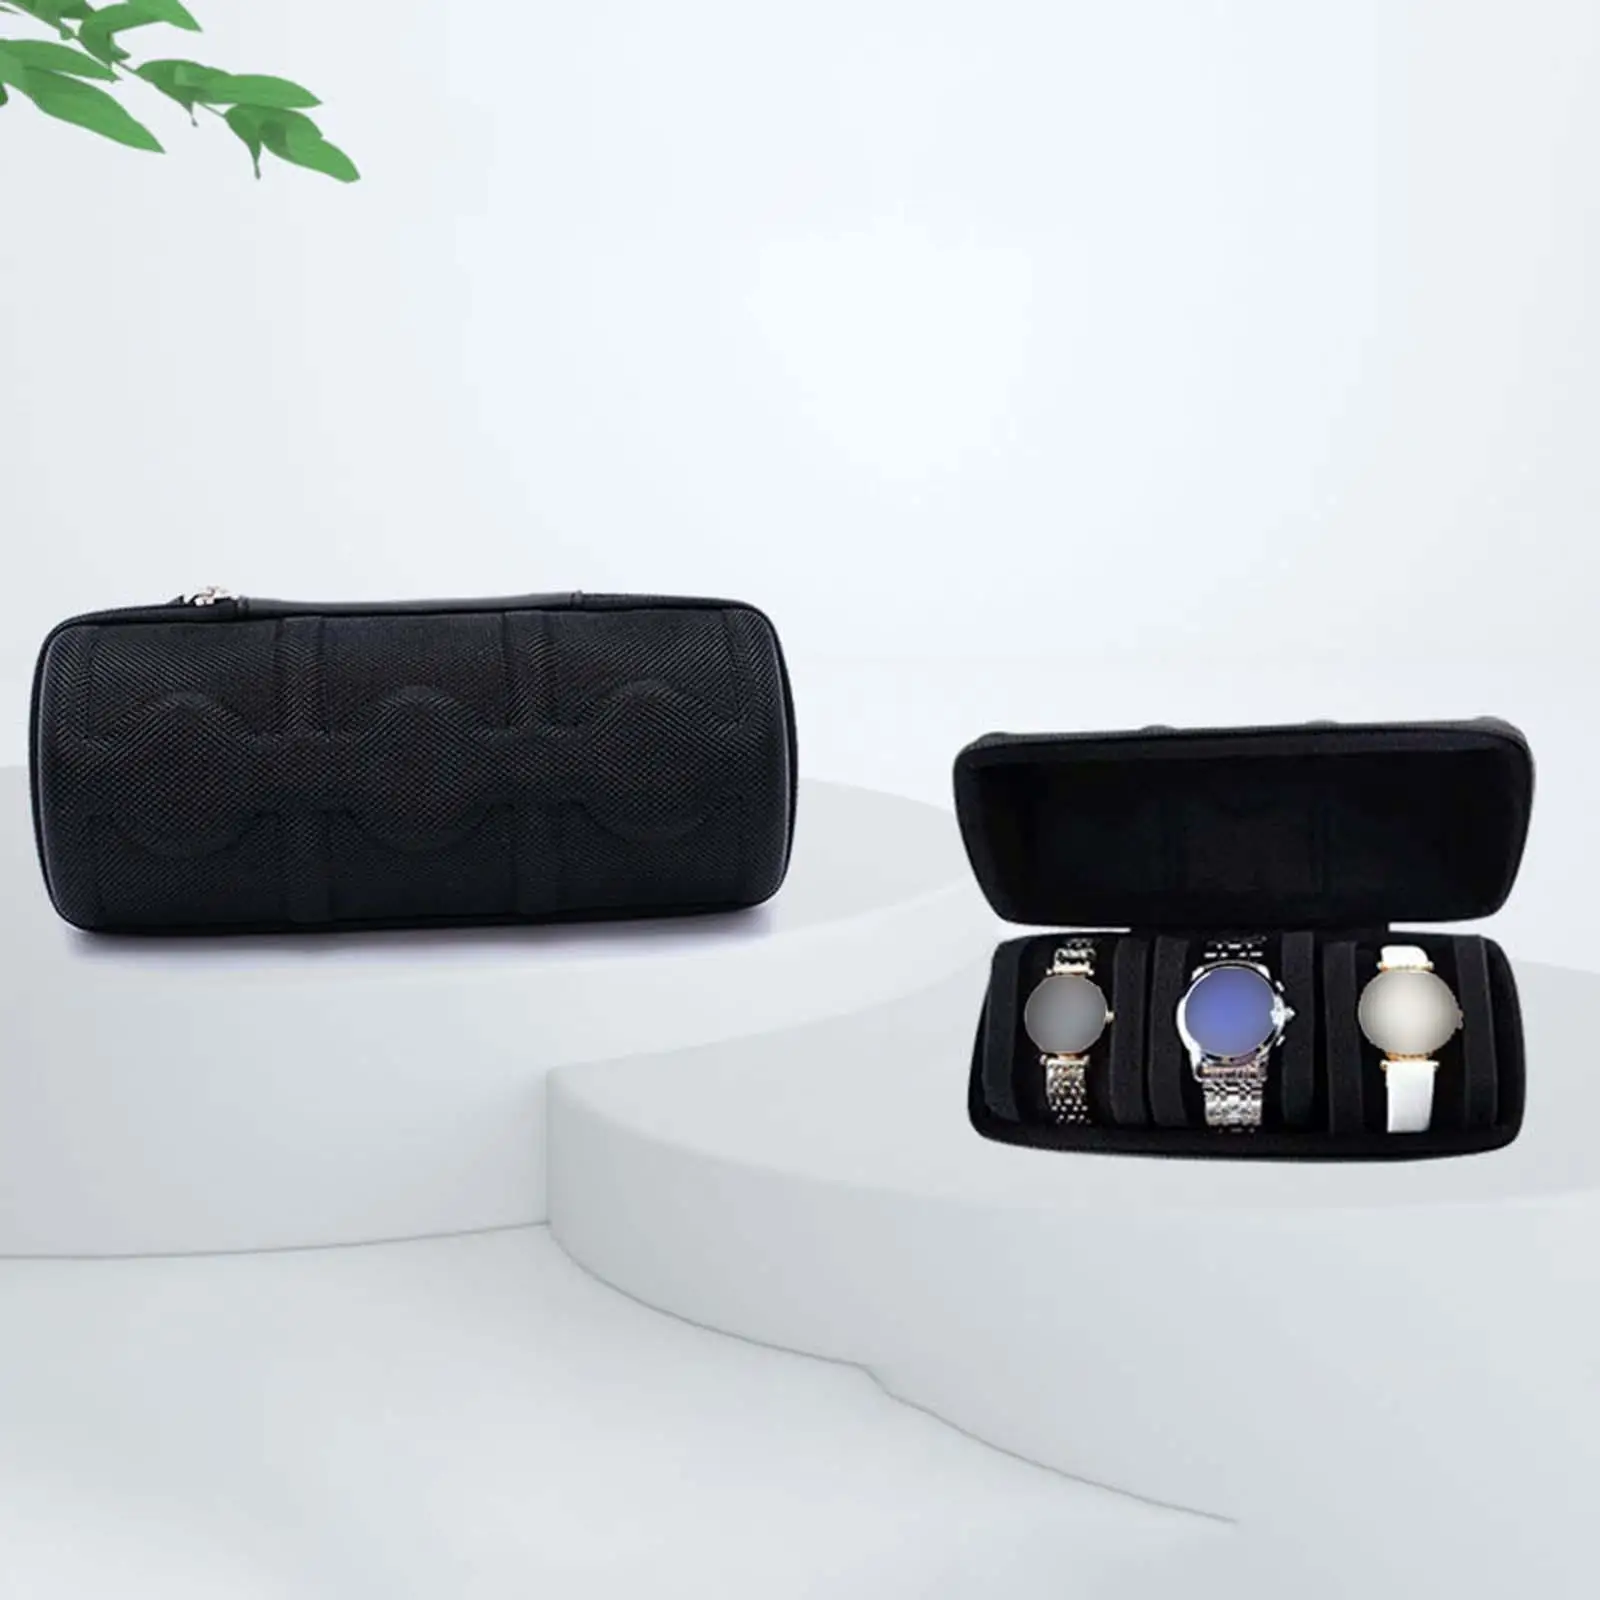 EVA Hard Shell Watch Case for Men Women Portable Watch Display Roll Organizer Watch Storage Box